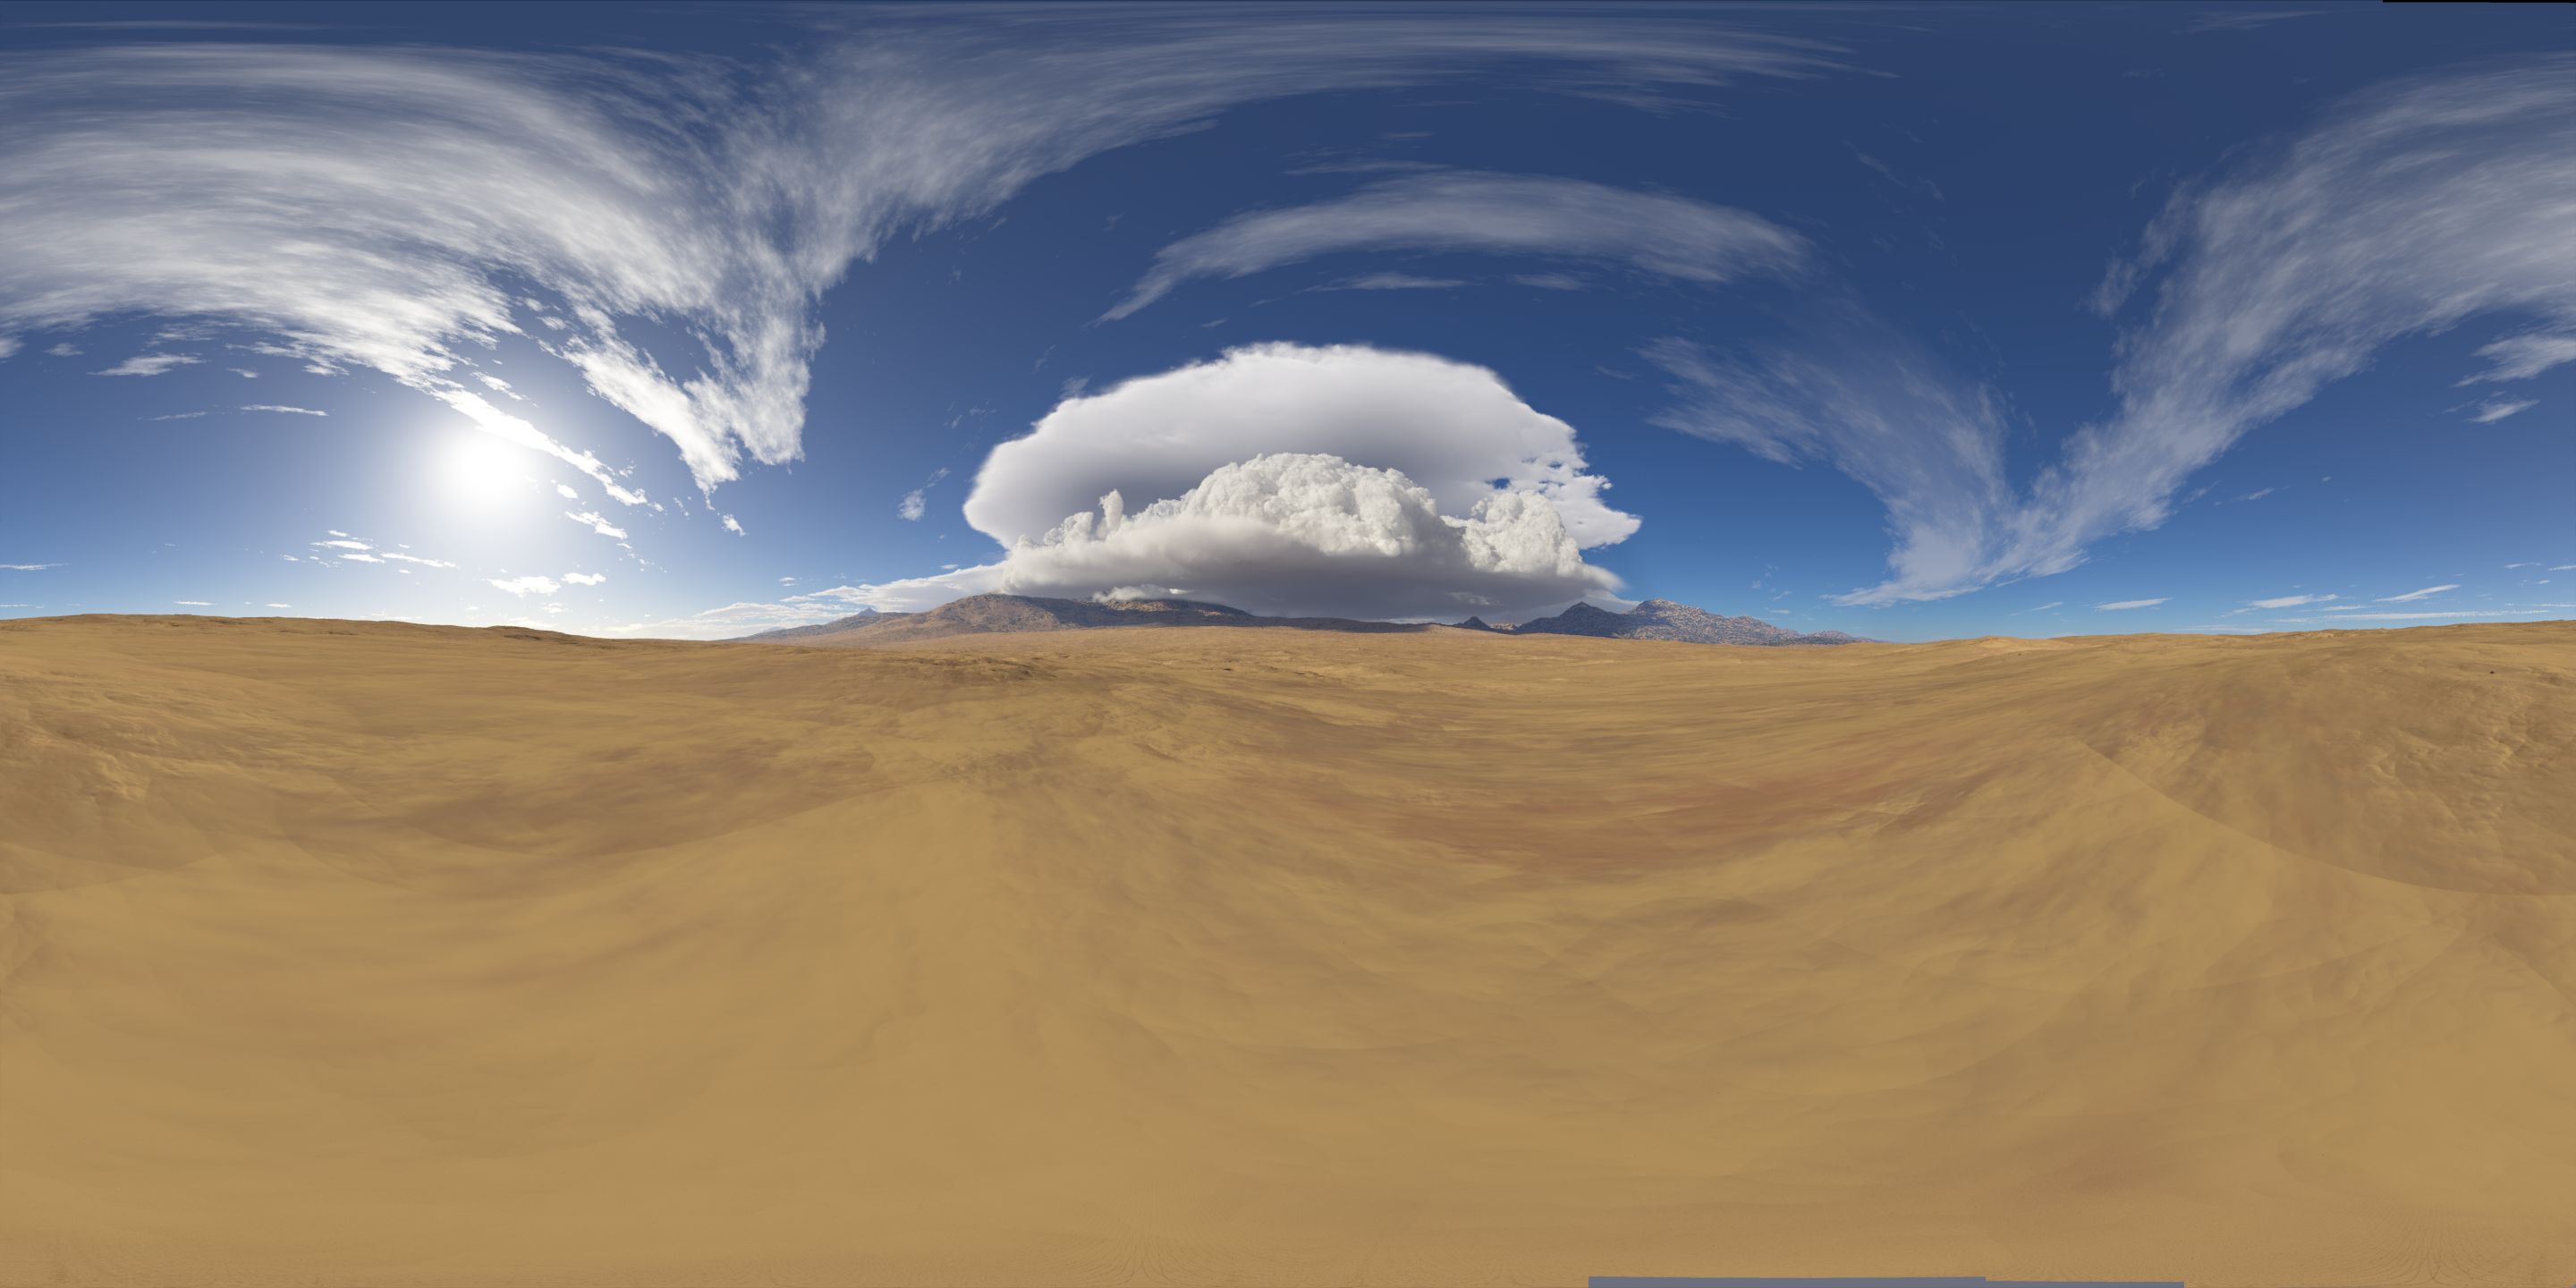 http://orig15.deviantart.net/edc6/f/2013/331/6/8/anvil___spherical_hdri_panorama_skybox_by_macsix-d6vv4hs.jpg